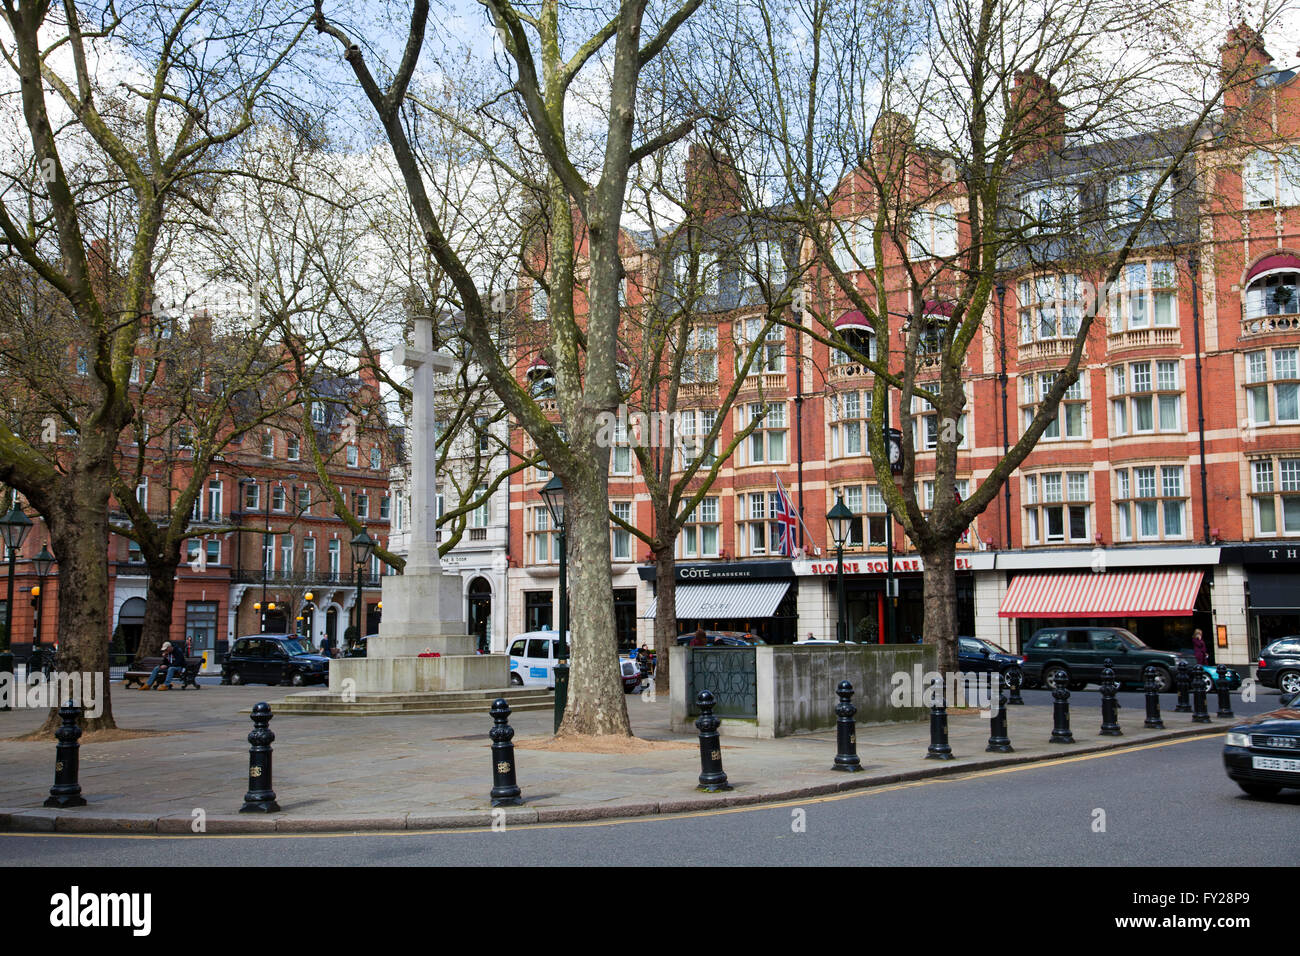 Sloane Square - London UK Stock Photo